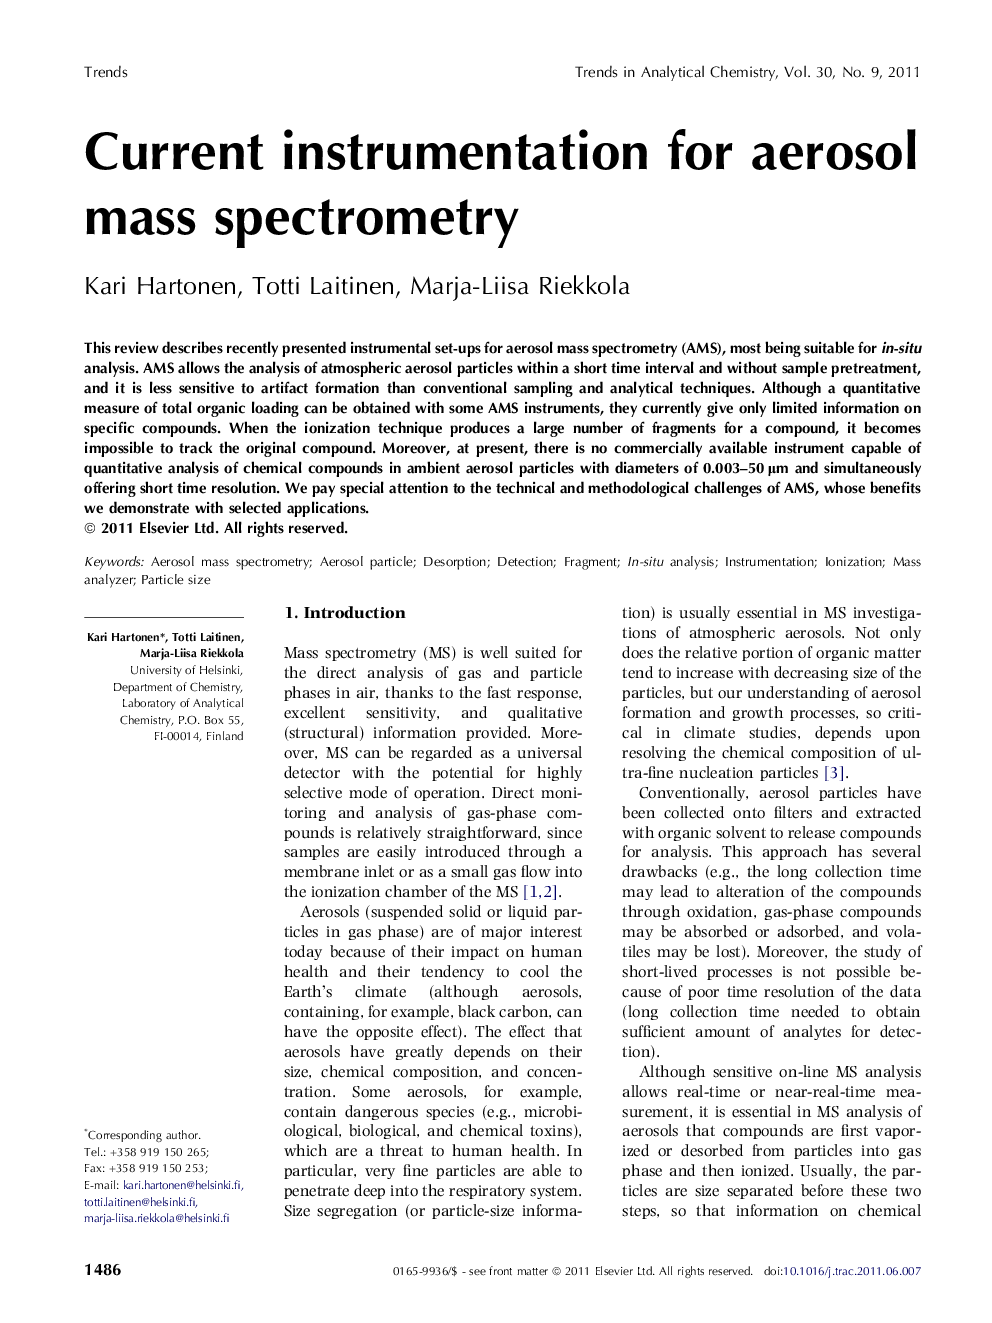 Current instrumentation for aerosol mass spectrometry